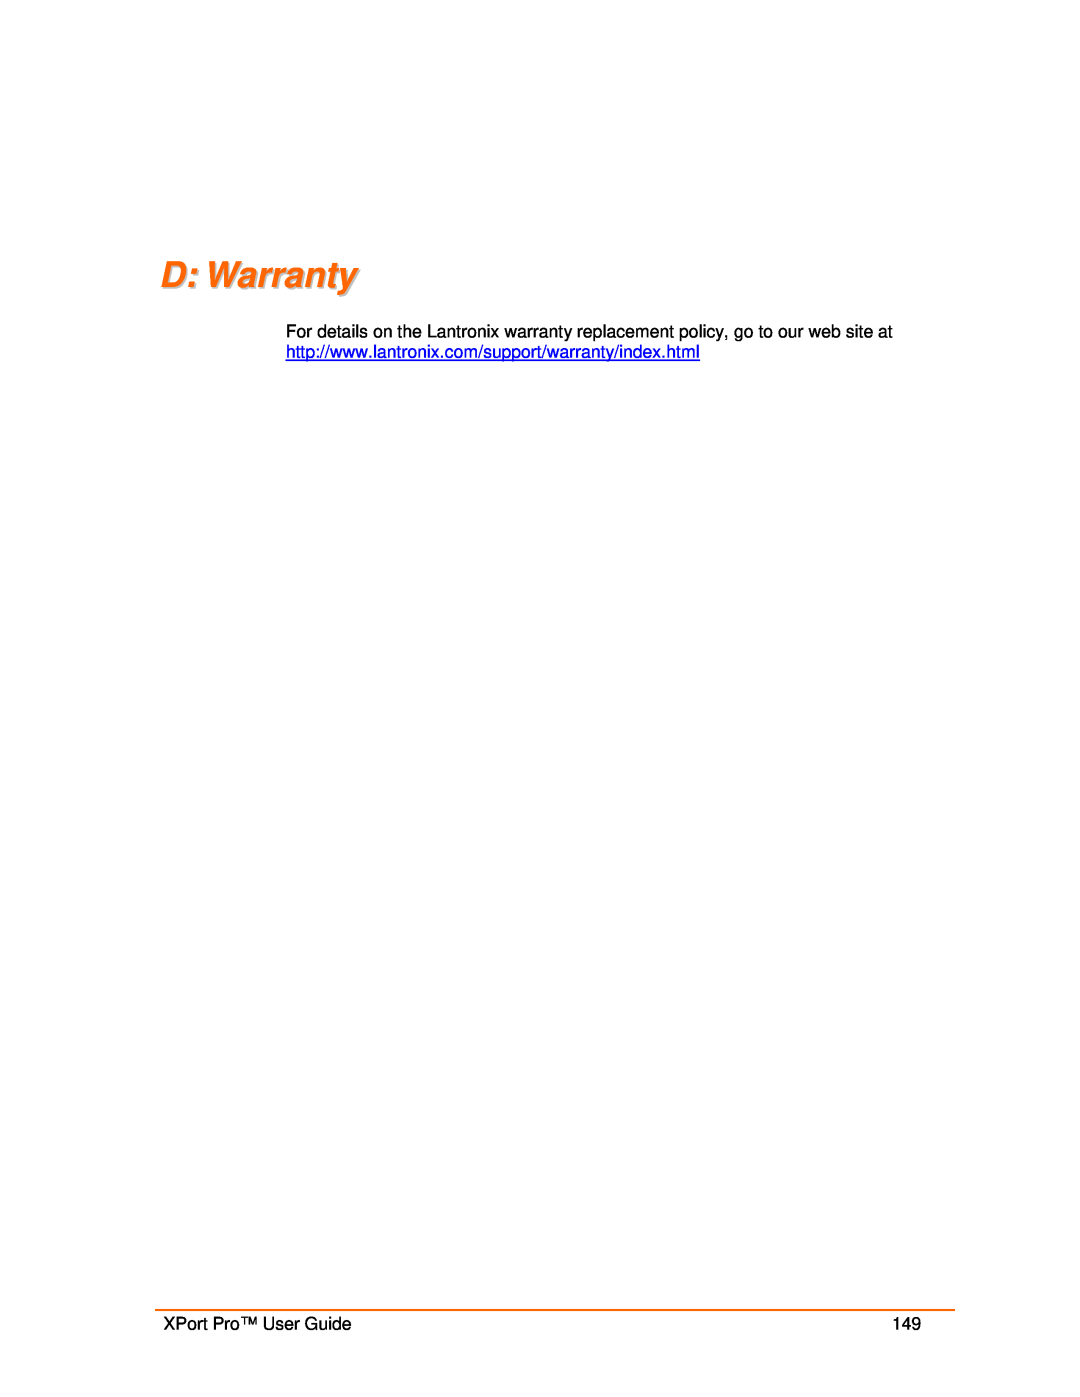 Lantronix 900-560 manual D Warranty, XPort Pro User Guide 